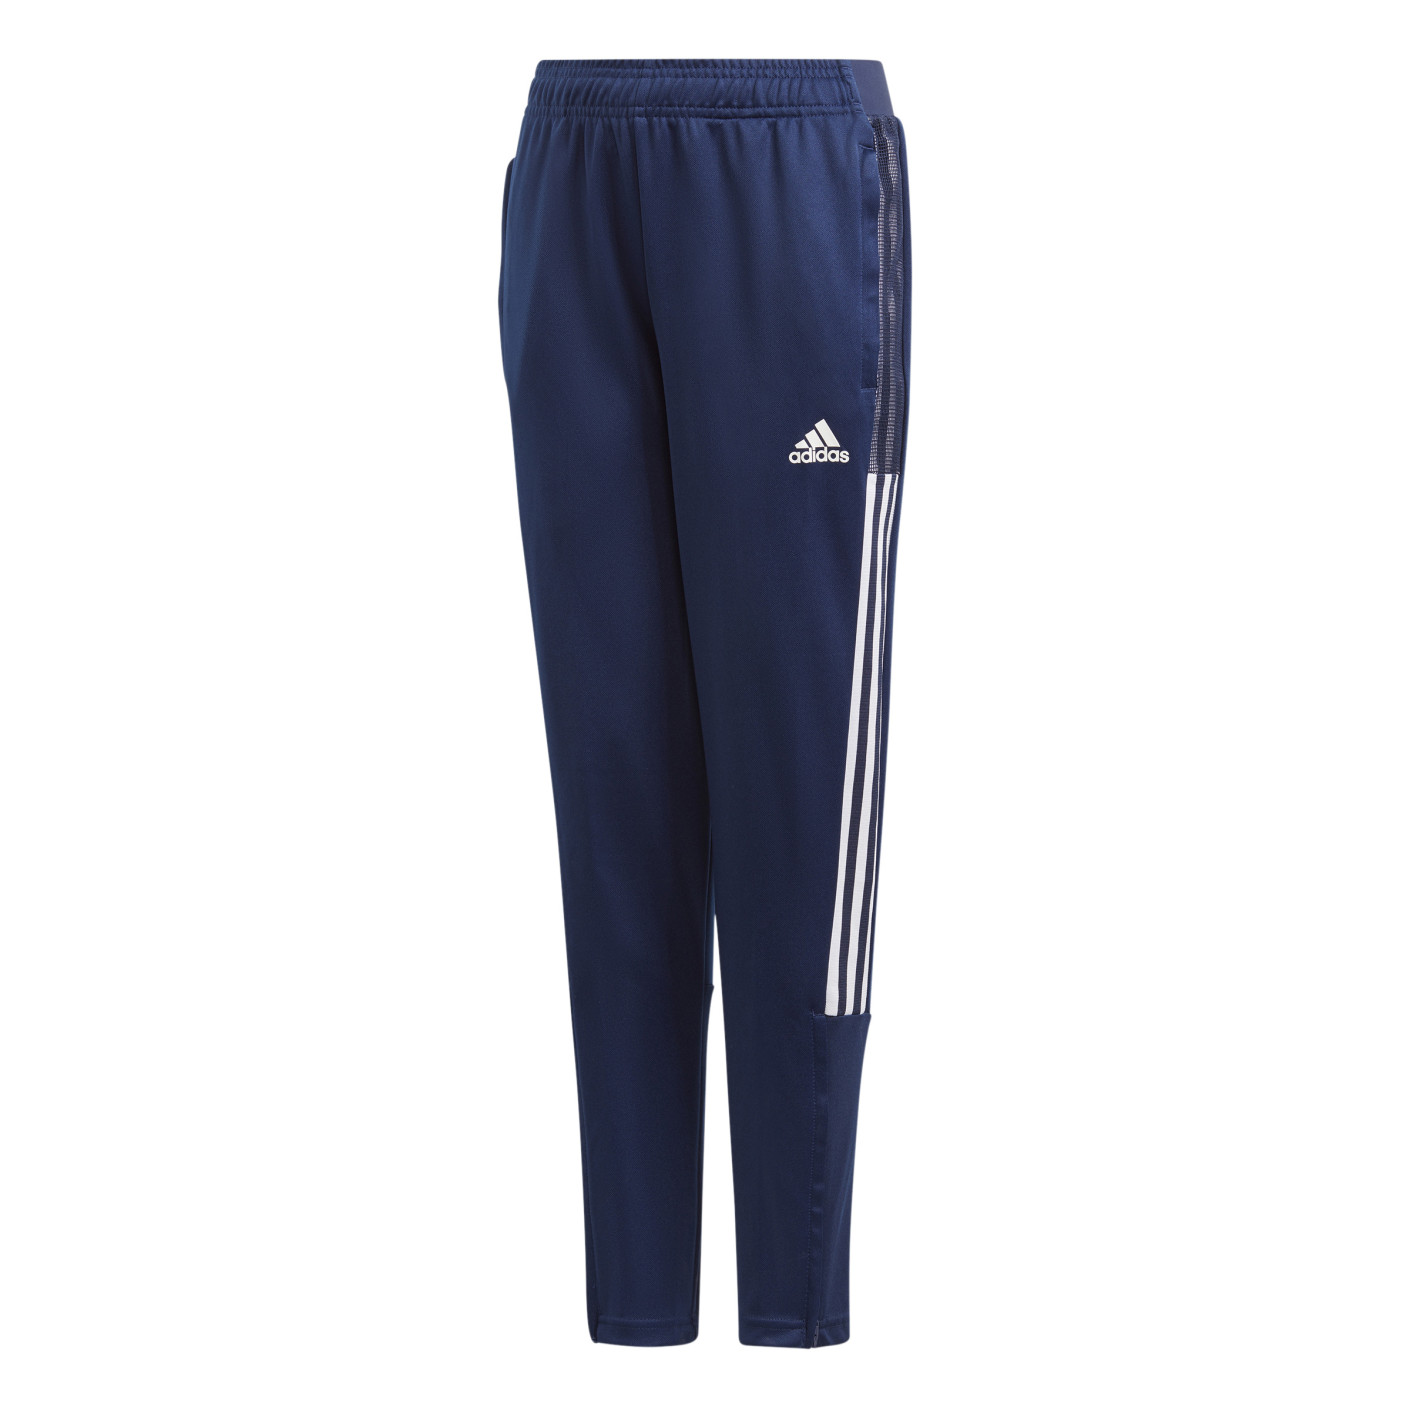 Pantalon d'entraînement adidas Tiro 21 pour enfants bleu foncé blanc